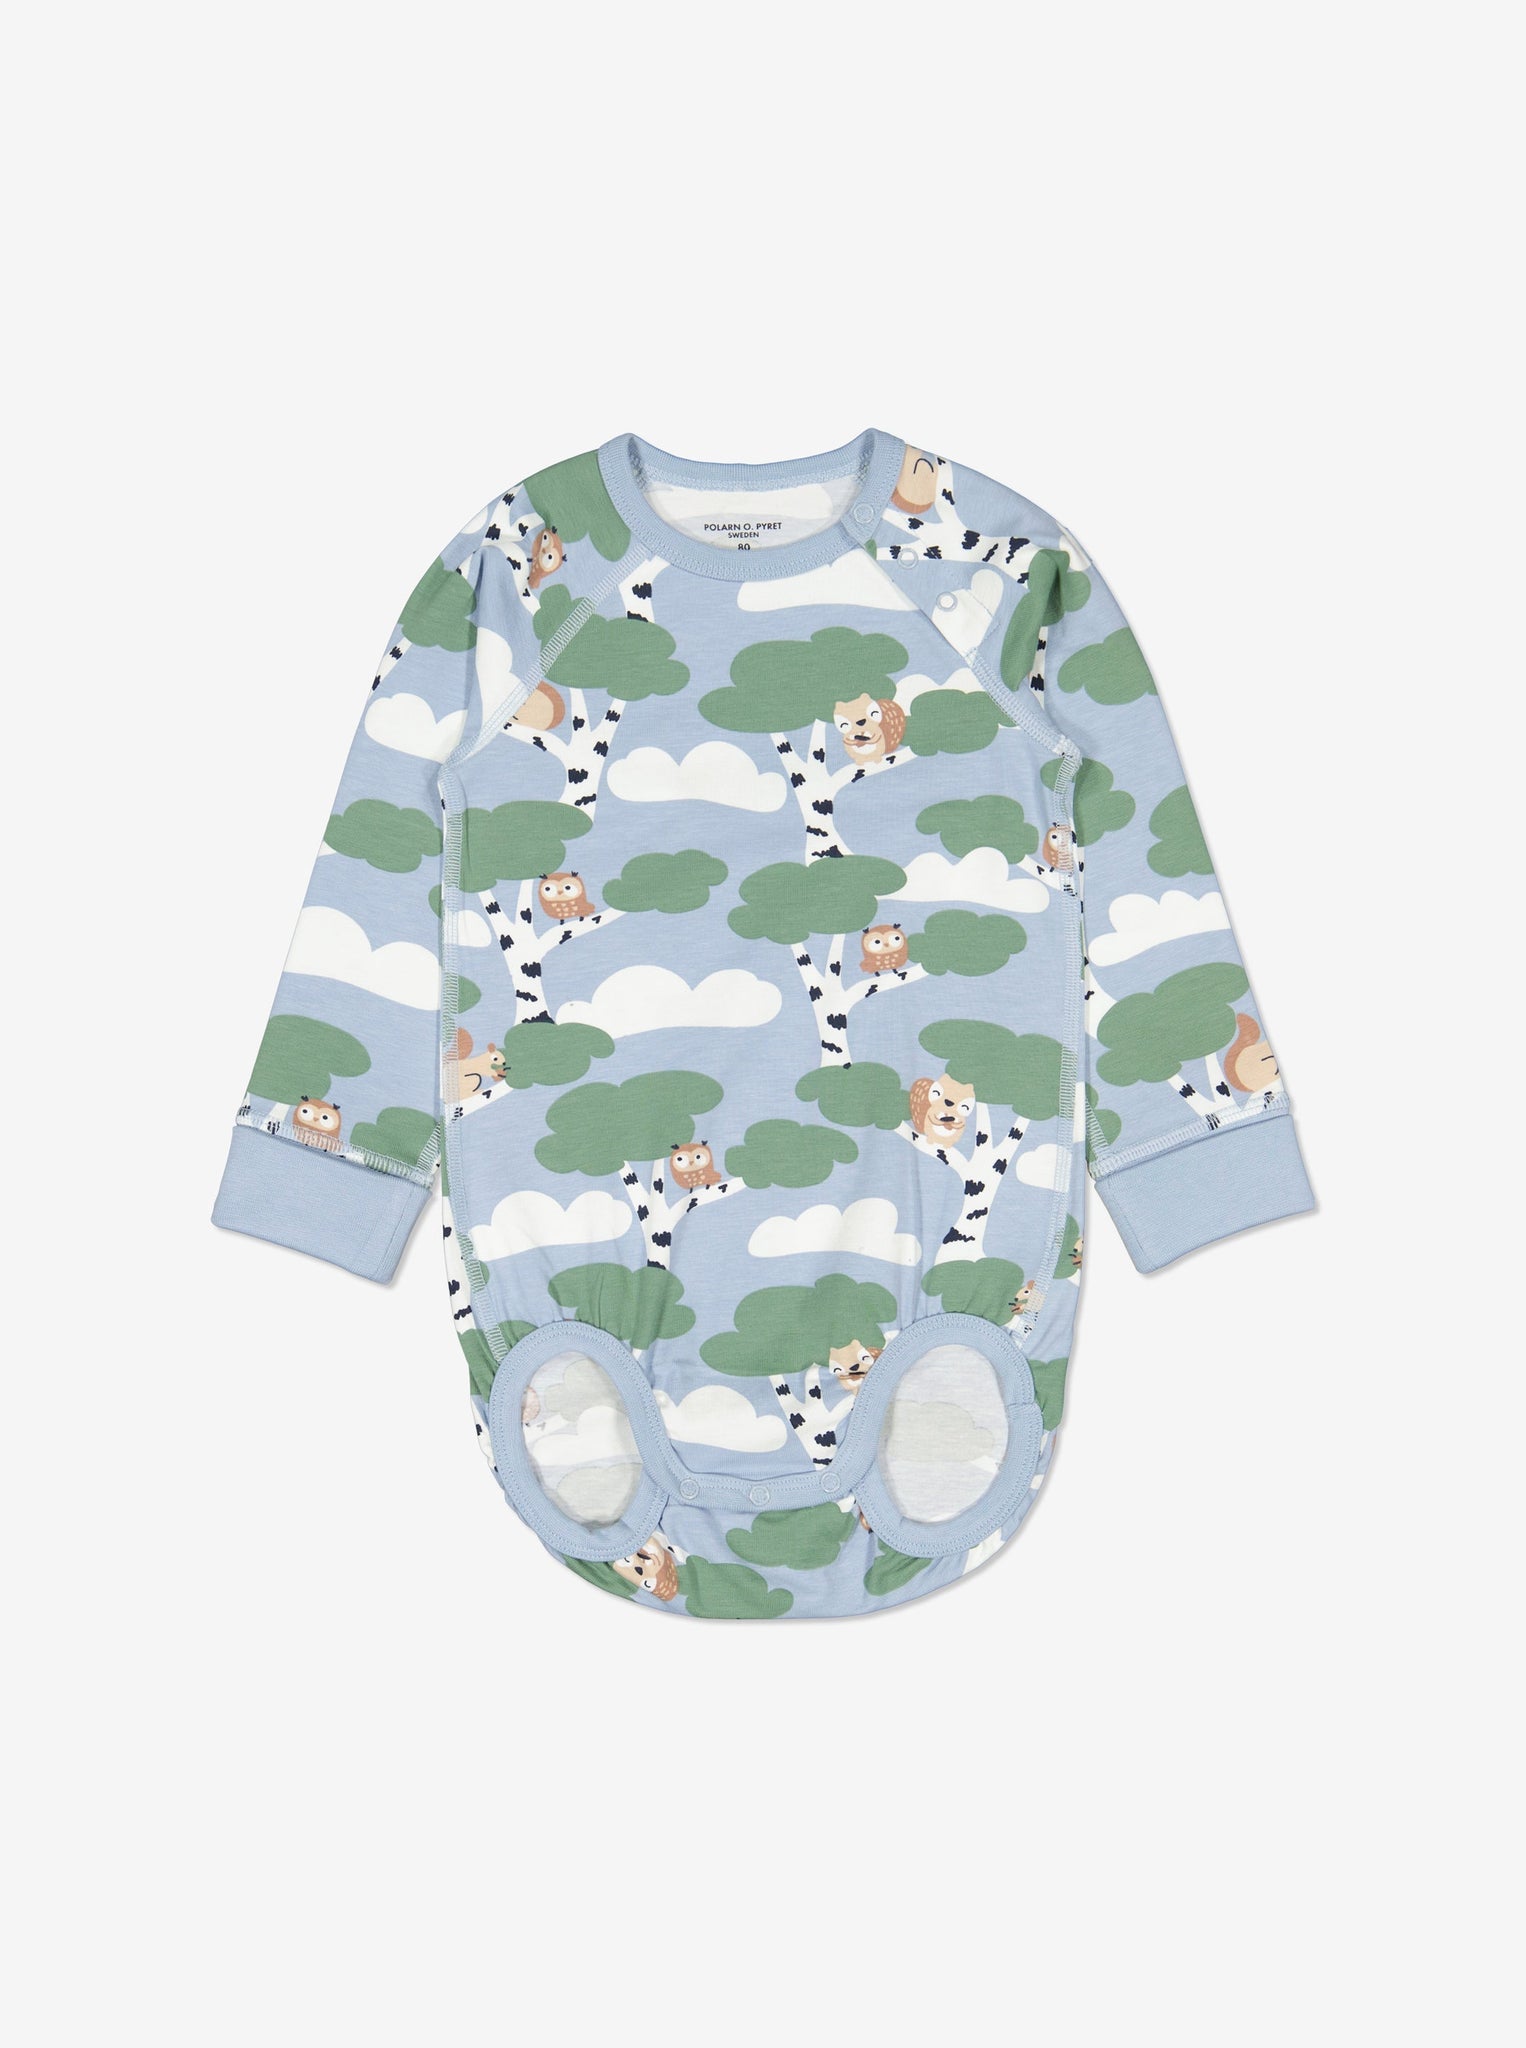  Forest Animals Newborn Babygrow from Polarn O. Pyret Kidswear. Made using environmentally friendly materials.